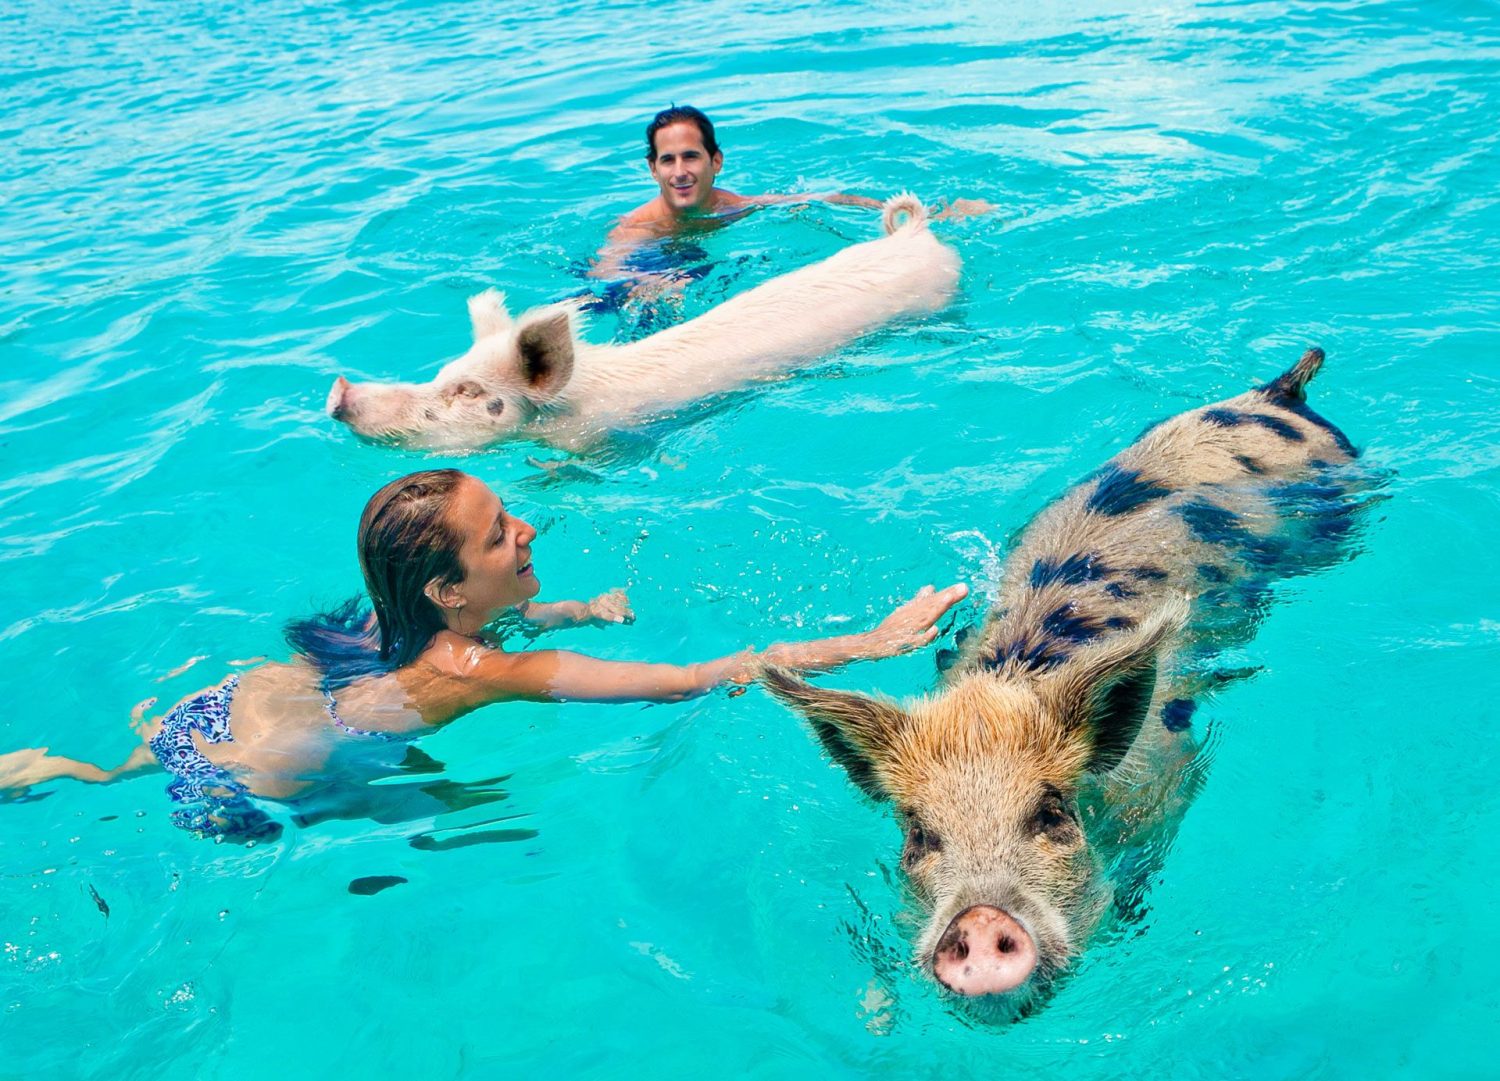 Pig Beach, An Island Full Of Swimming Pigs